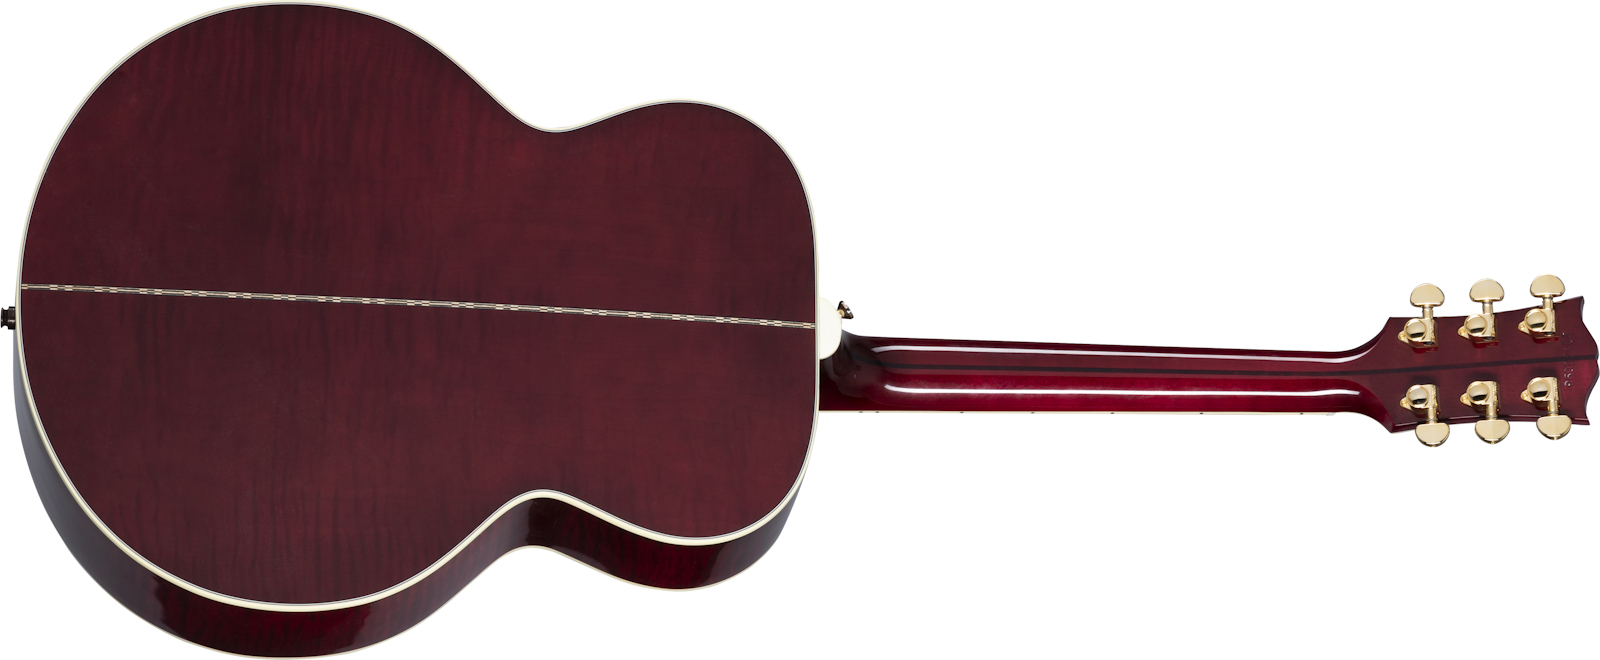 Gibson Sj-200 Standard Modern 2021 Super Jumbo Epicea Erable Rw - Wine Red - Guitarra electro acustica - Variation 1